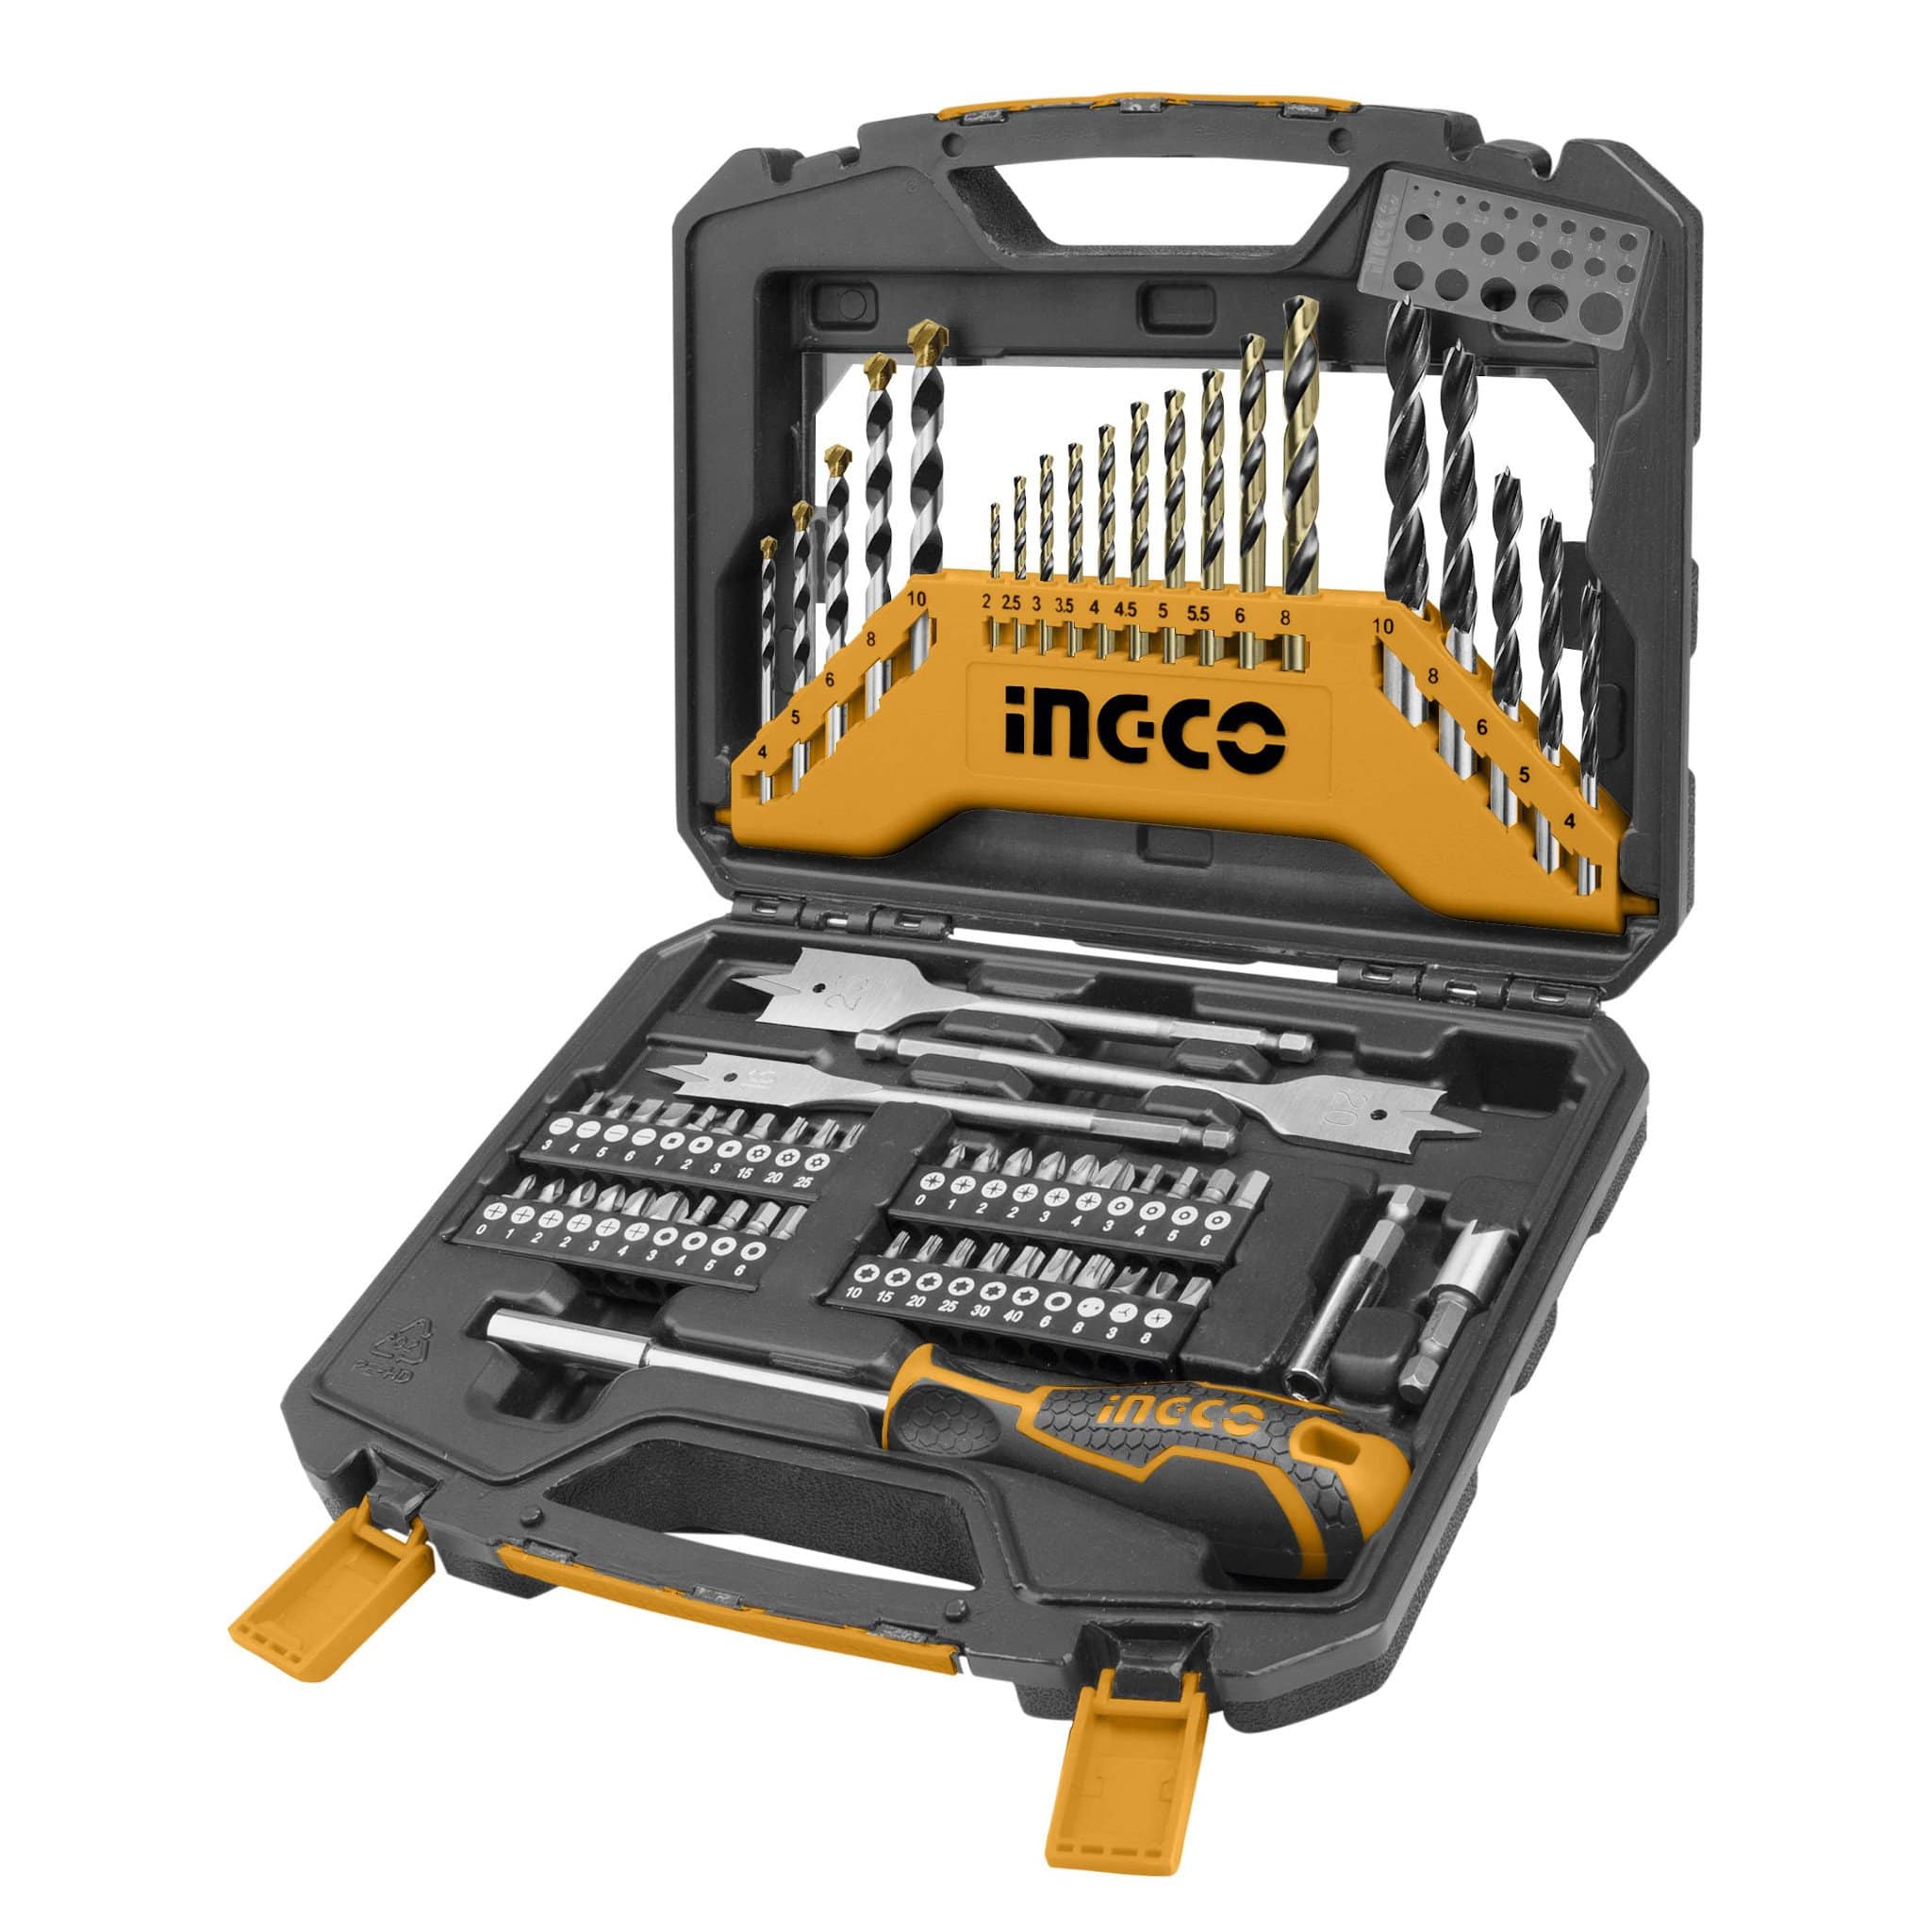 Ingco 67 Accessories Set - Masonry Drill Bits, HSS Twist Drill Bits, Wood Twist Drill Bits, Screwdriver Bits - HKTAC010671 | Supply Master | Accra, Ghana Tools Building Steel Engineering Hardware tool